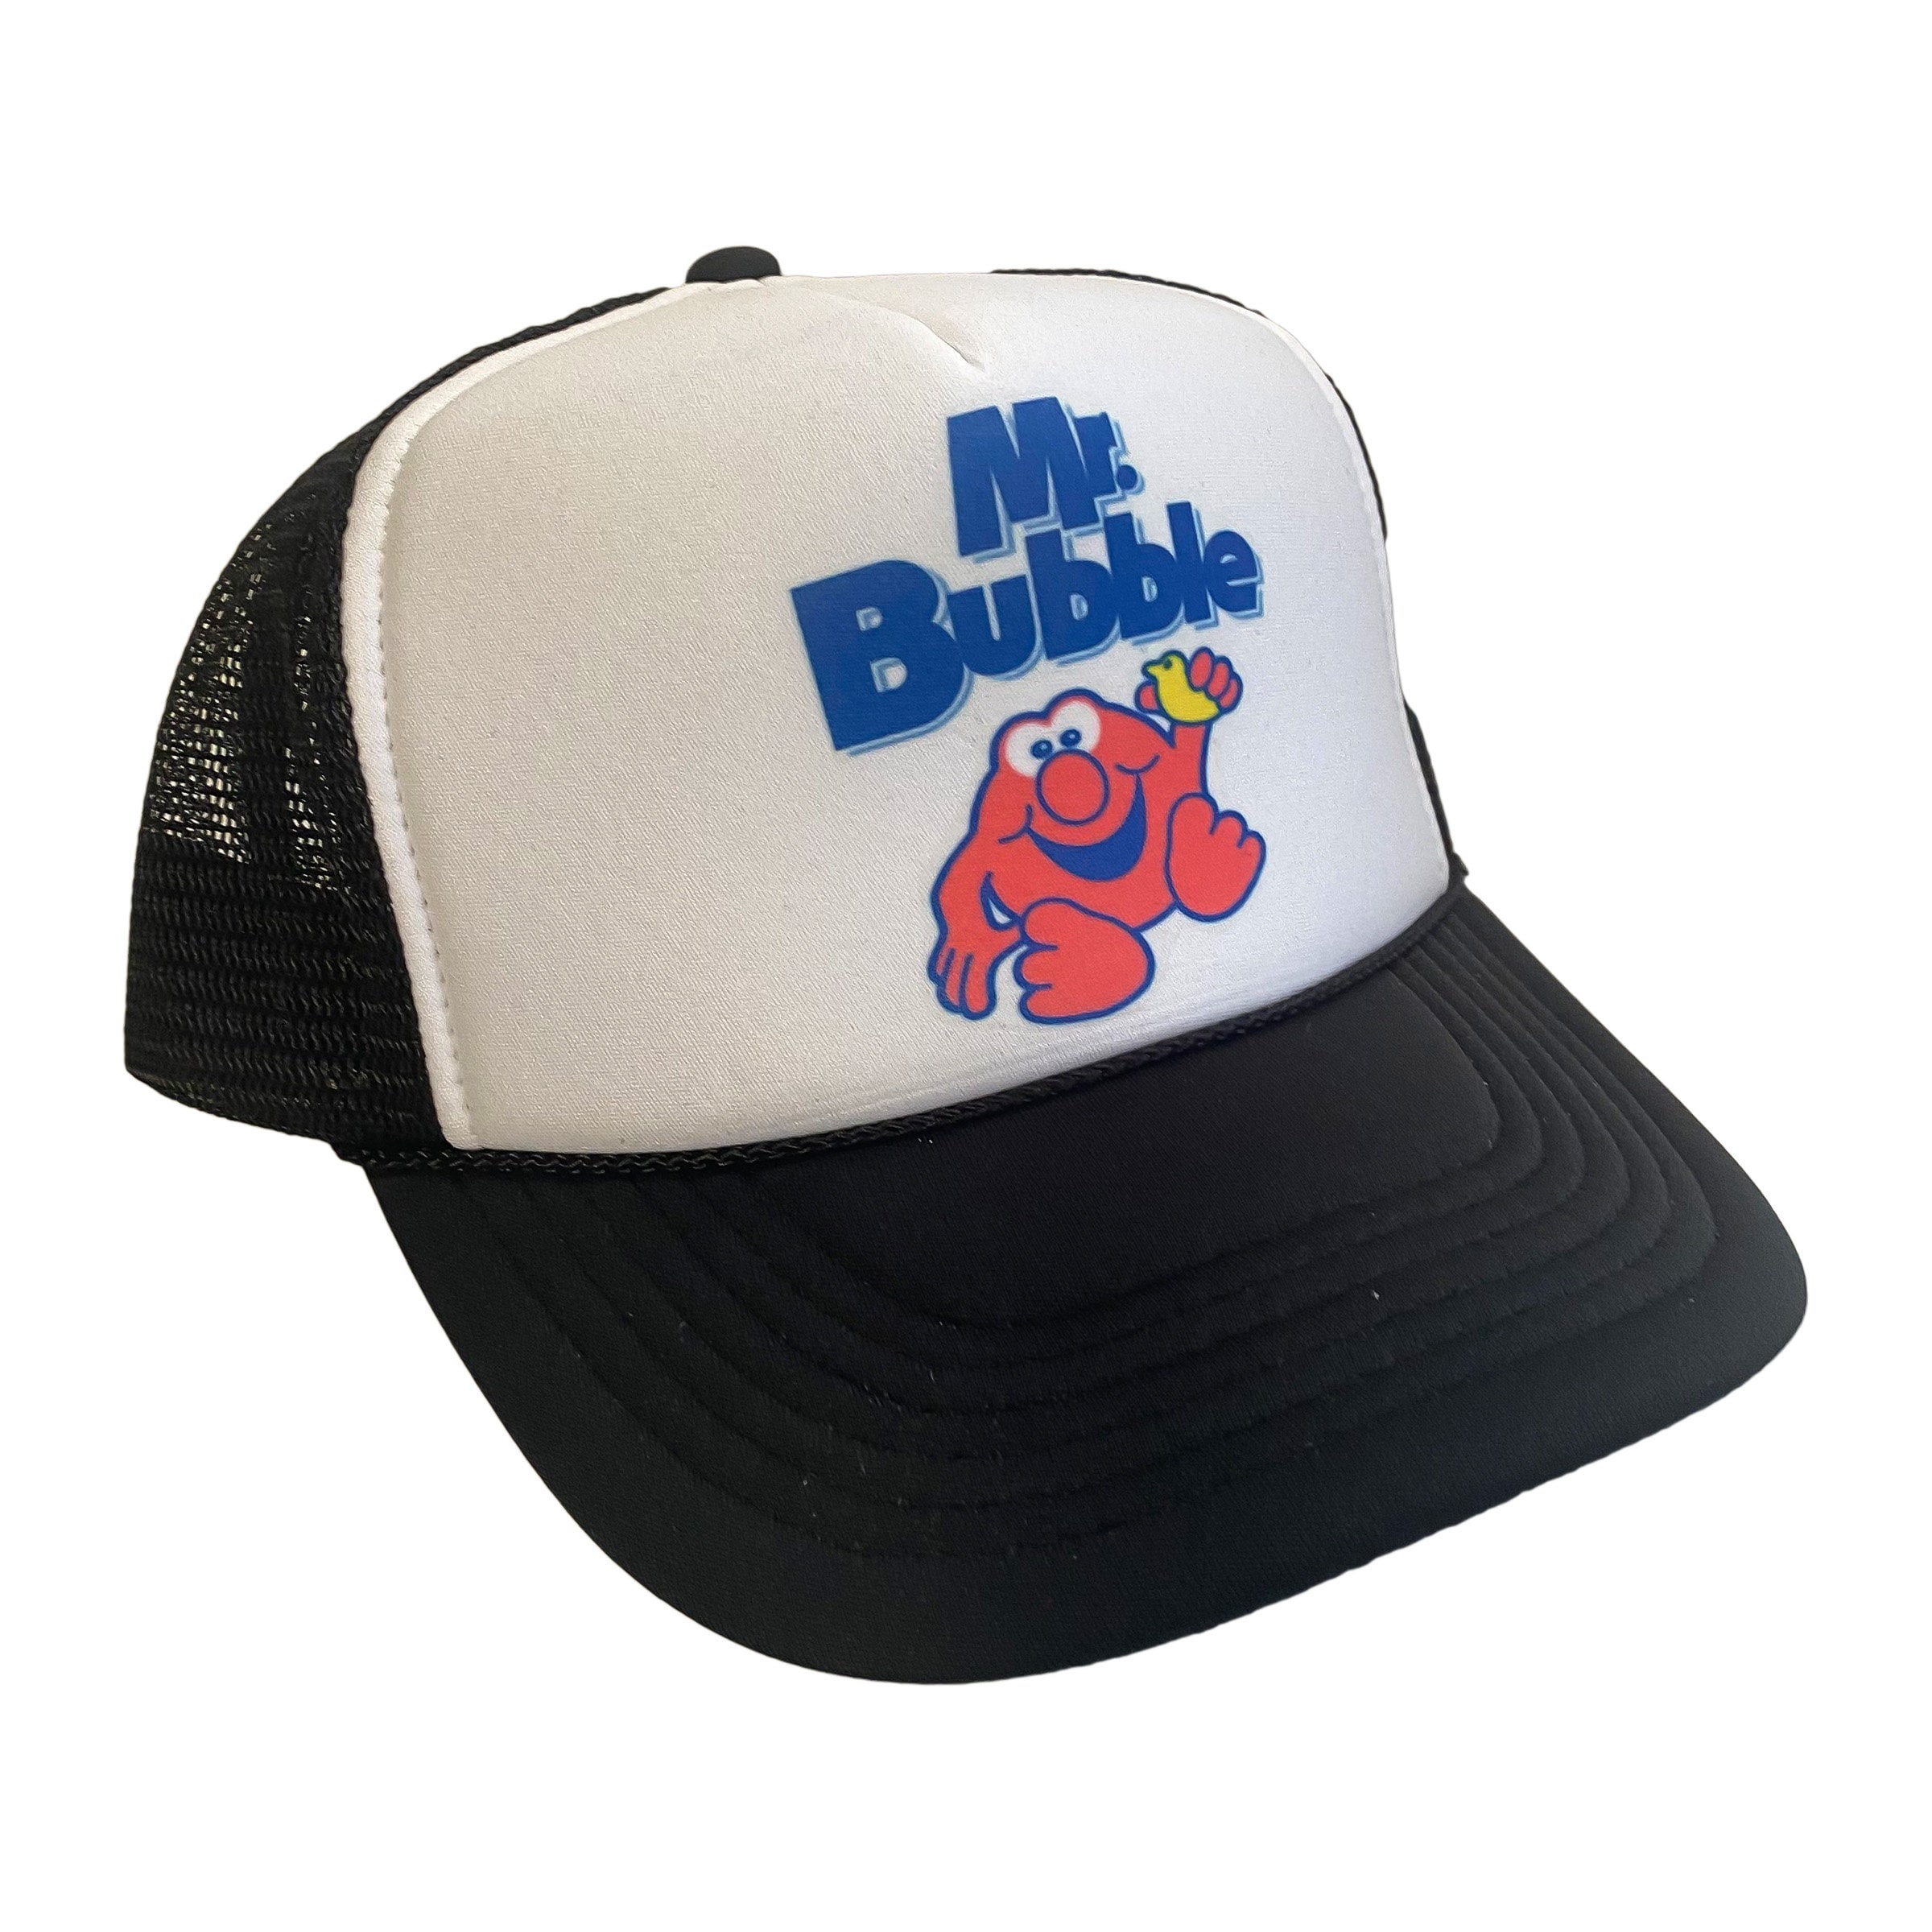 Mr. Bubble Hat Snapback Adjustable Cap | Vintage Black Mr. Bubble Tucker Hat